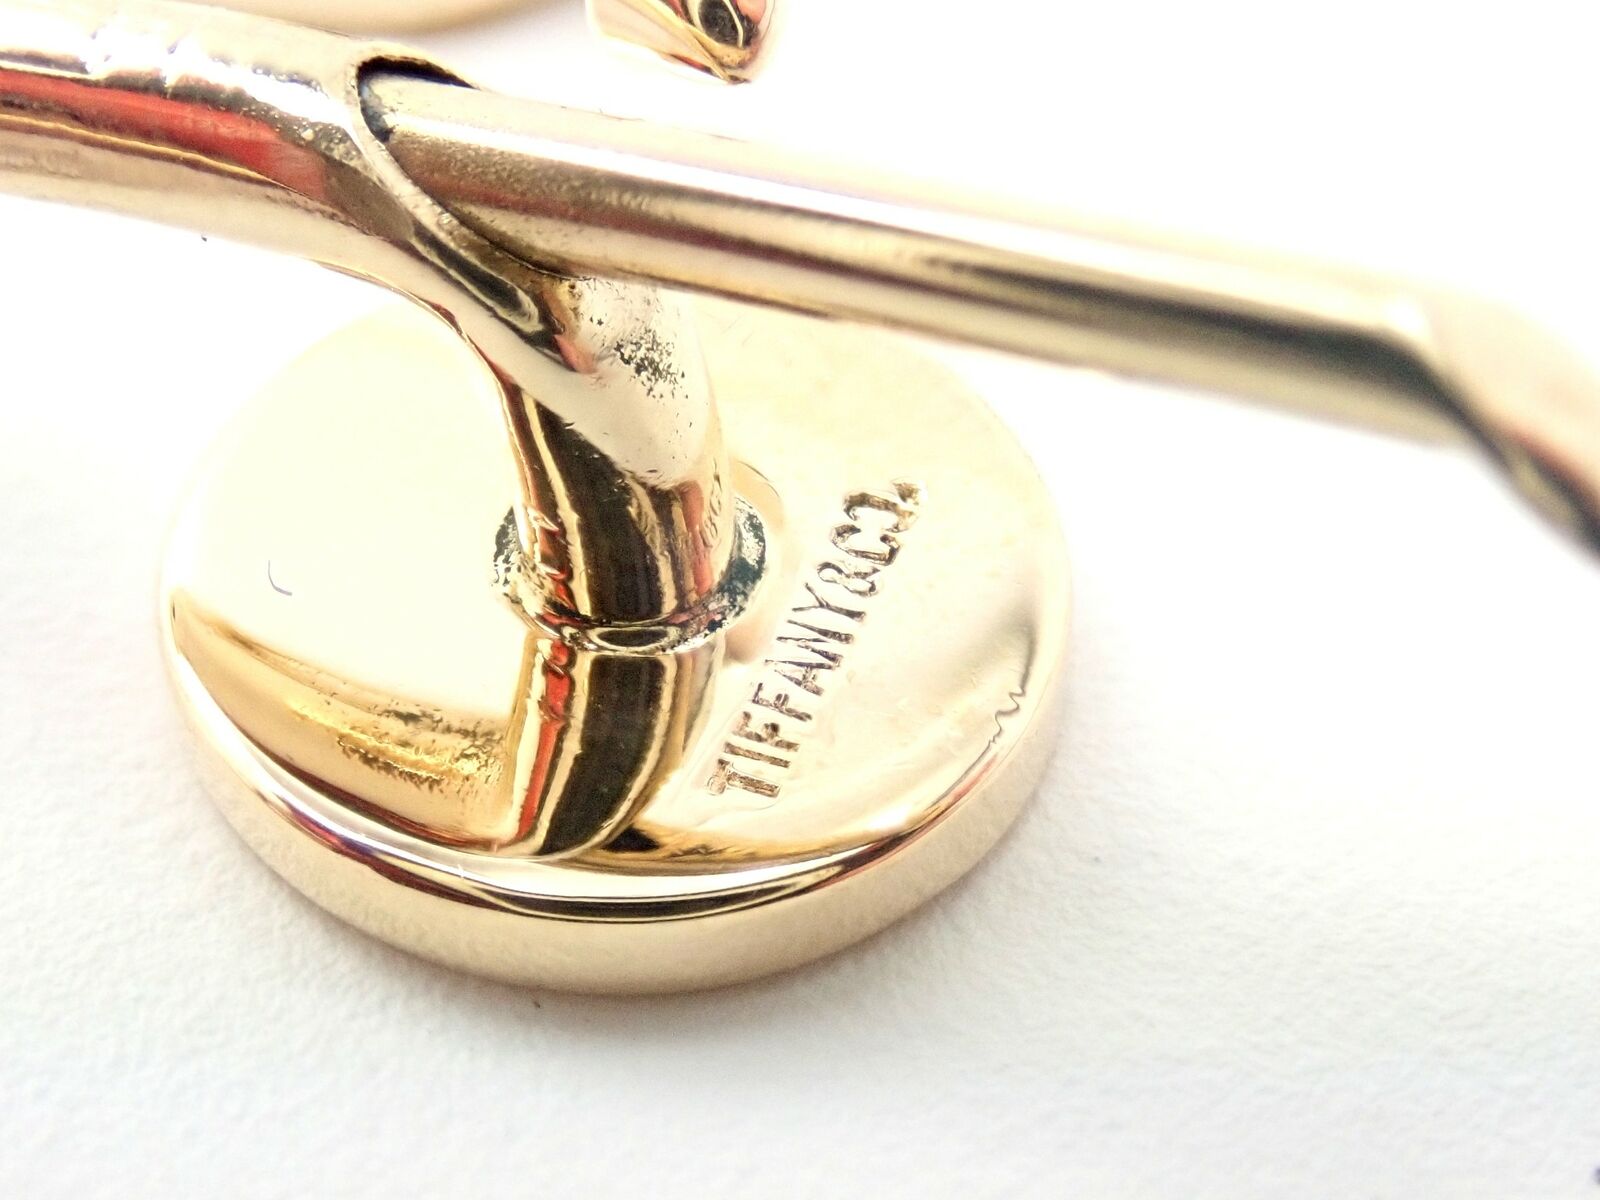 Tiffany & Co. Jewelry & Watches:Men's Jewelry:Cufflinks Authentic Tiffany & Co. 14k Yellow Gold Mens Cufflinks Tuxedo Buttons Full Set